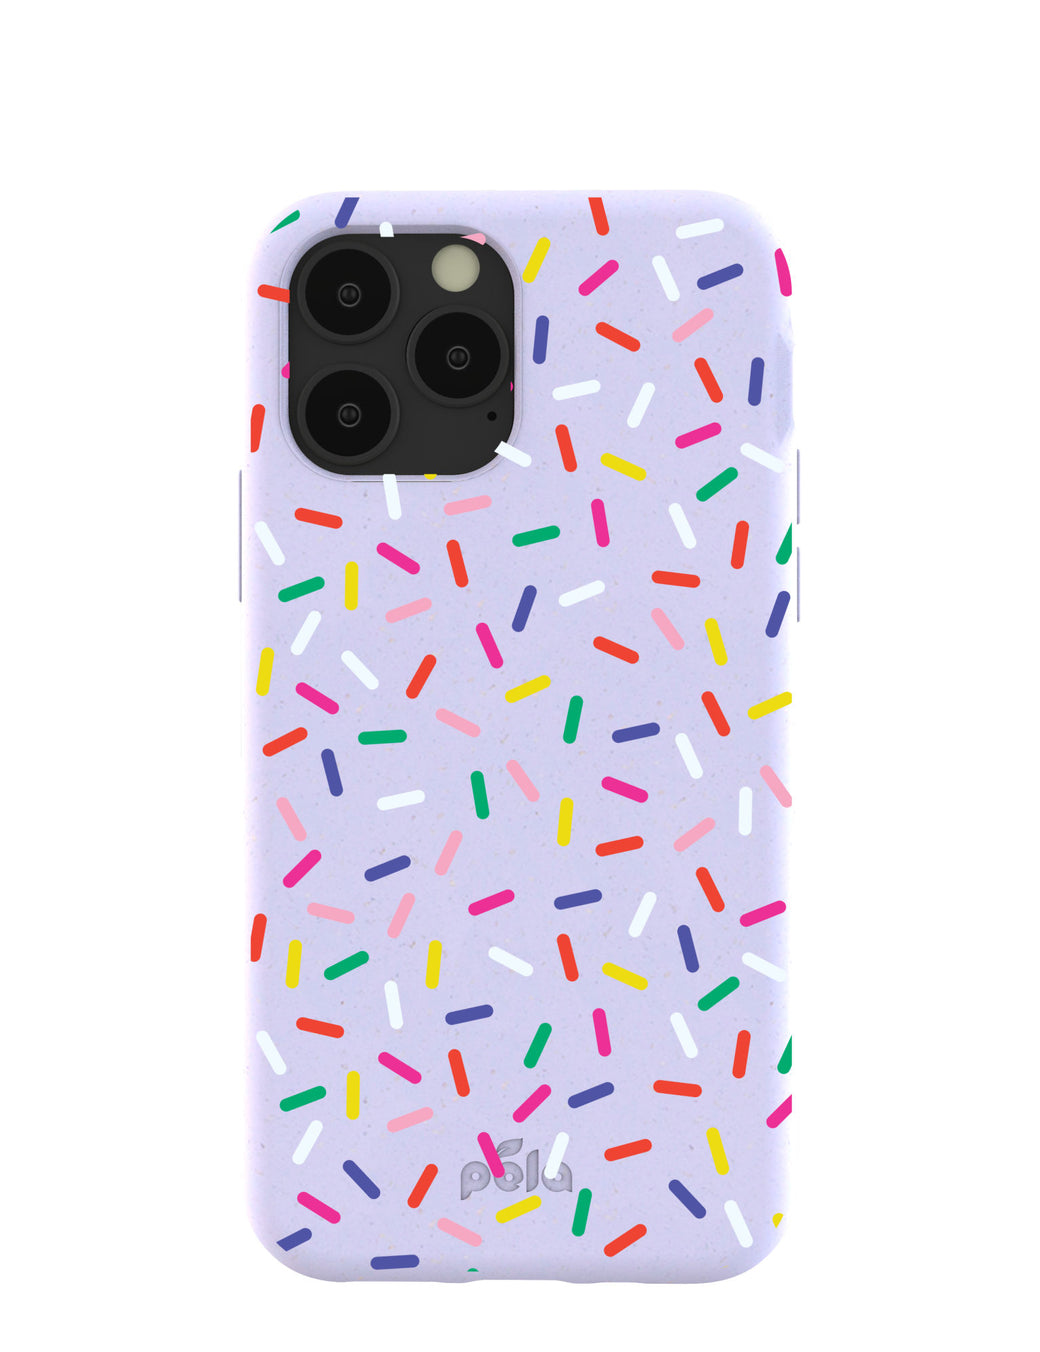 Lavender Sprinkles iPhone 11 Pro Case